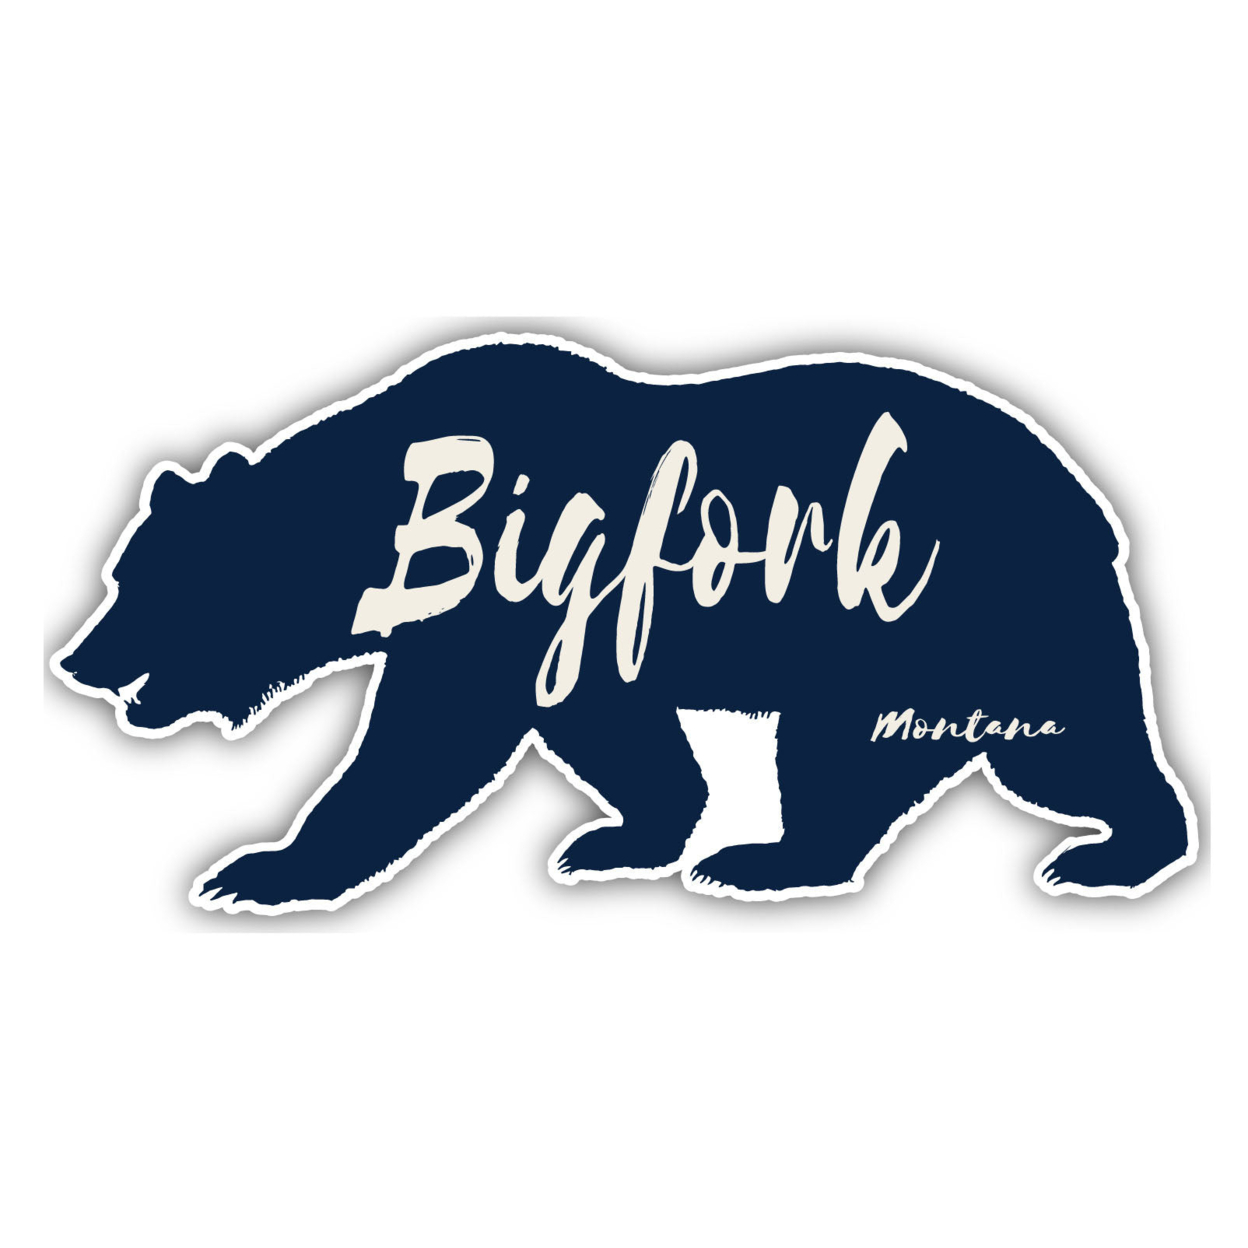 Bigfork Montana Souvenir Decorative Stickers (Choose Theme And Size) - Single Unit, 8-Inch, Great Outdoors